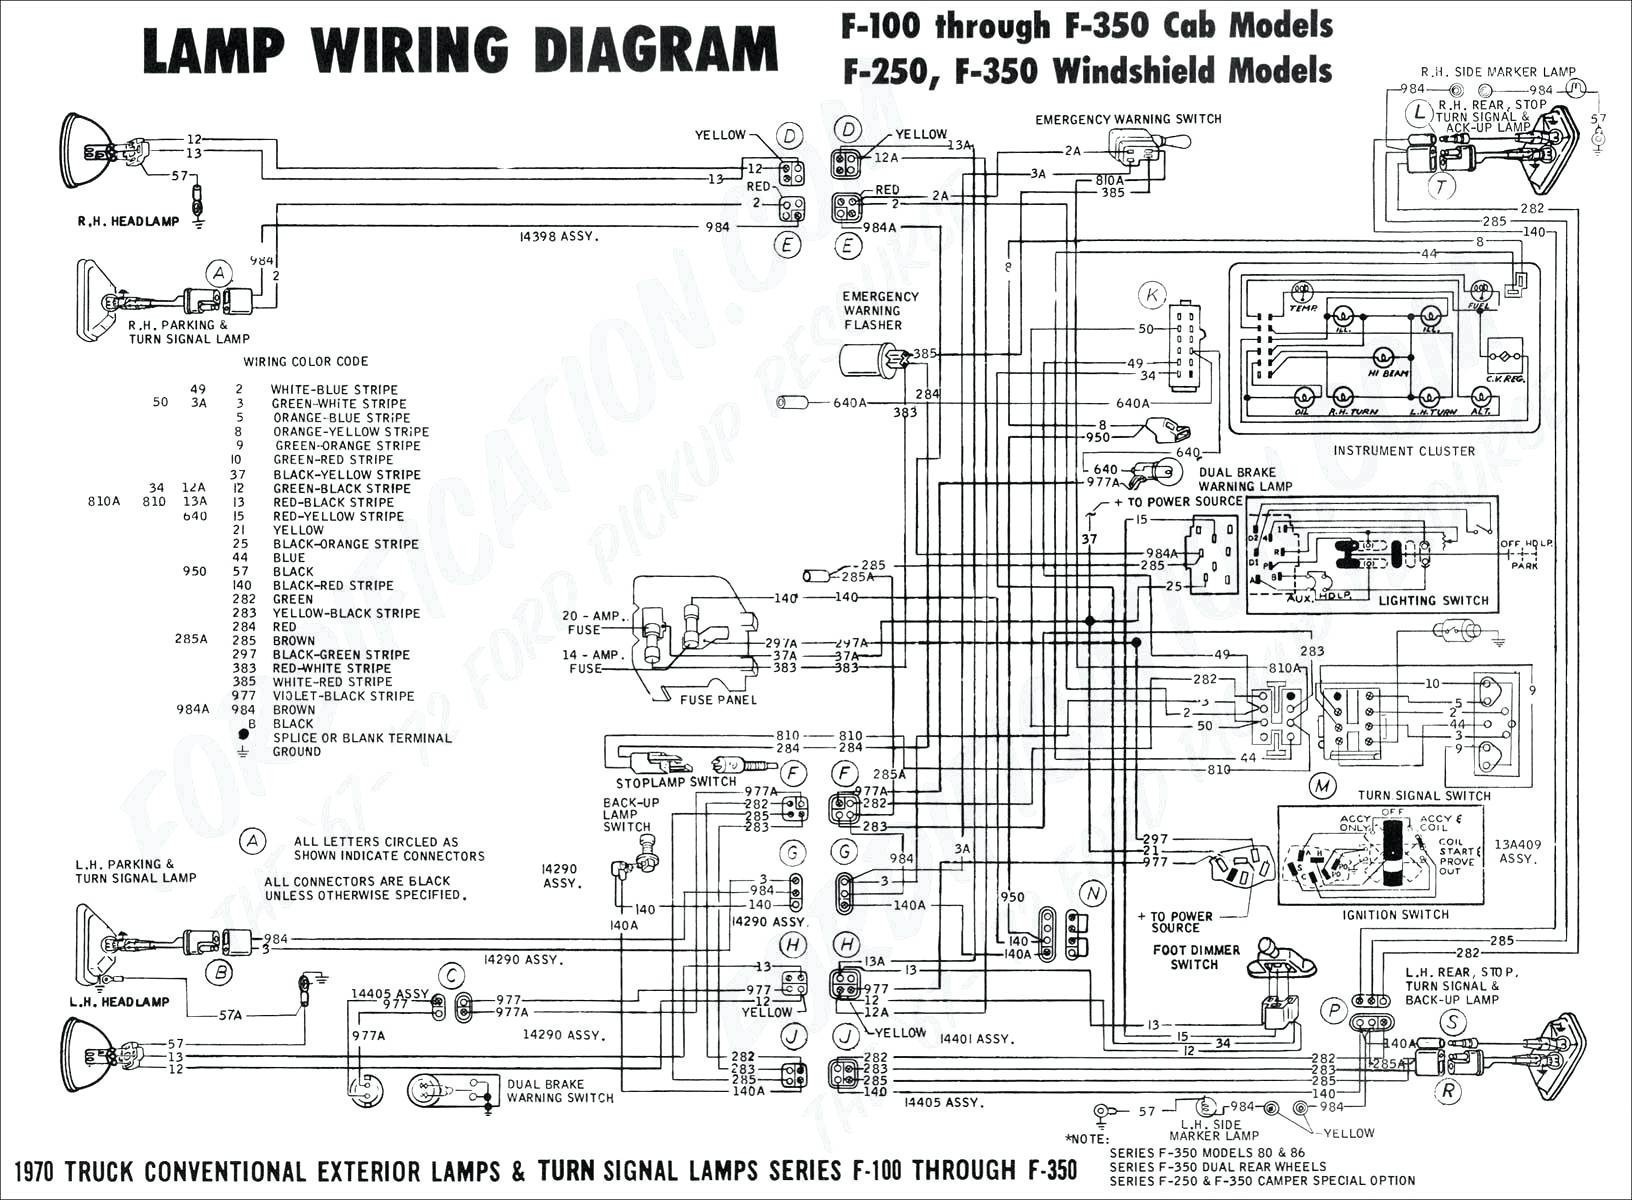 Car Trailer socket Wiring Diagram Wiring Diagram Uk Plug top Rated Car Trailer Wiring Diagram Uk New Of Car Trailer socket Wiring Diagram